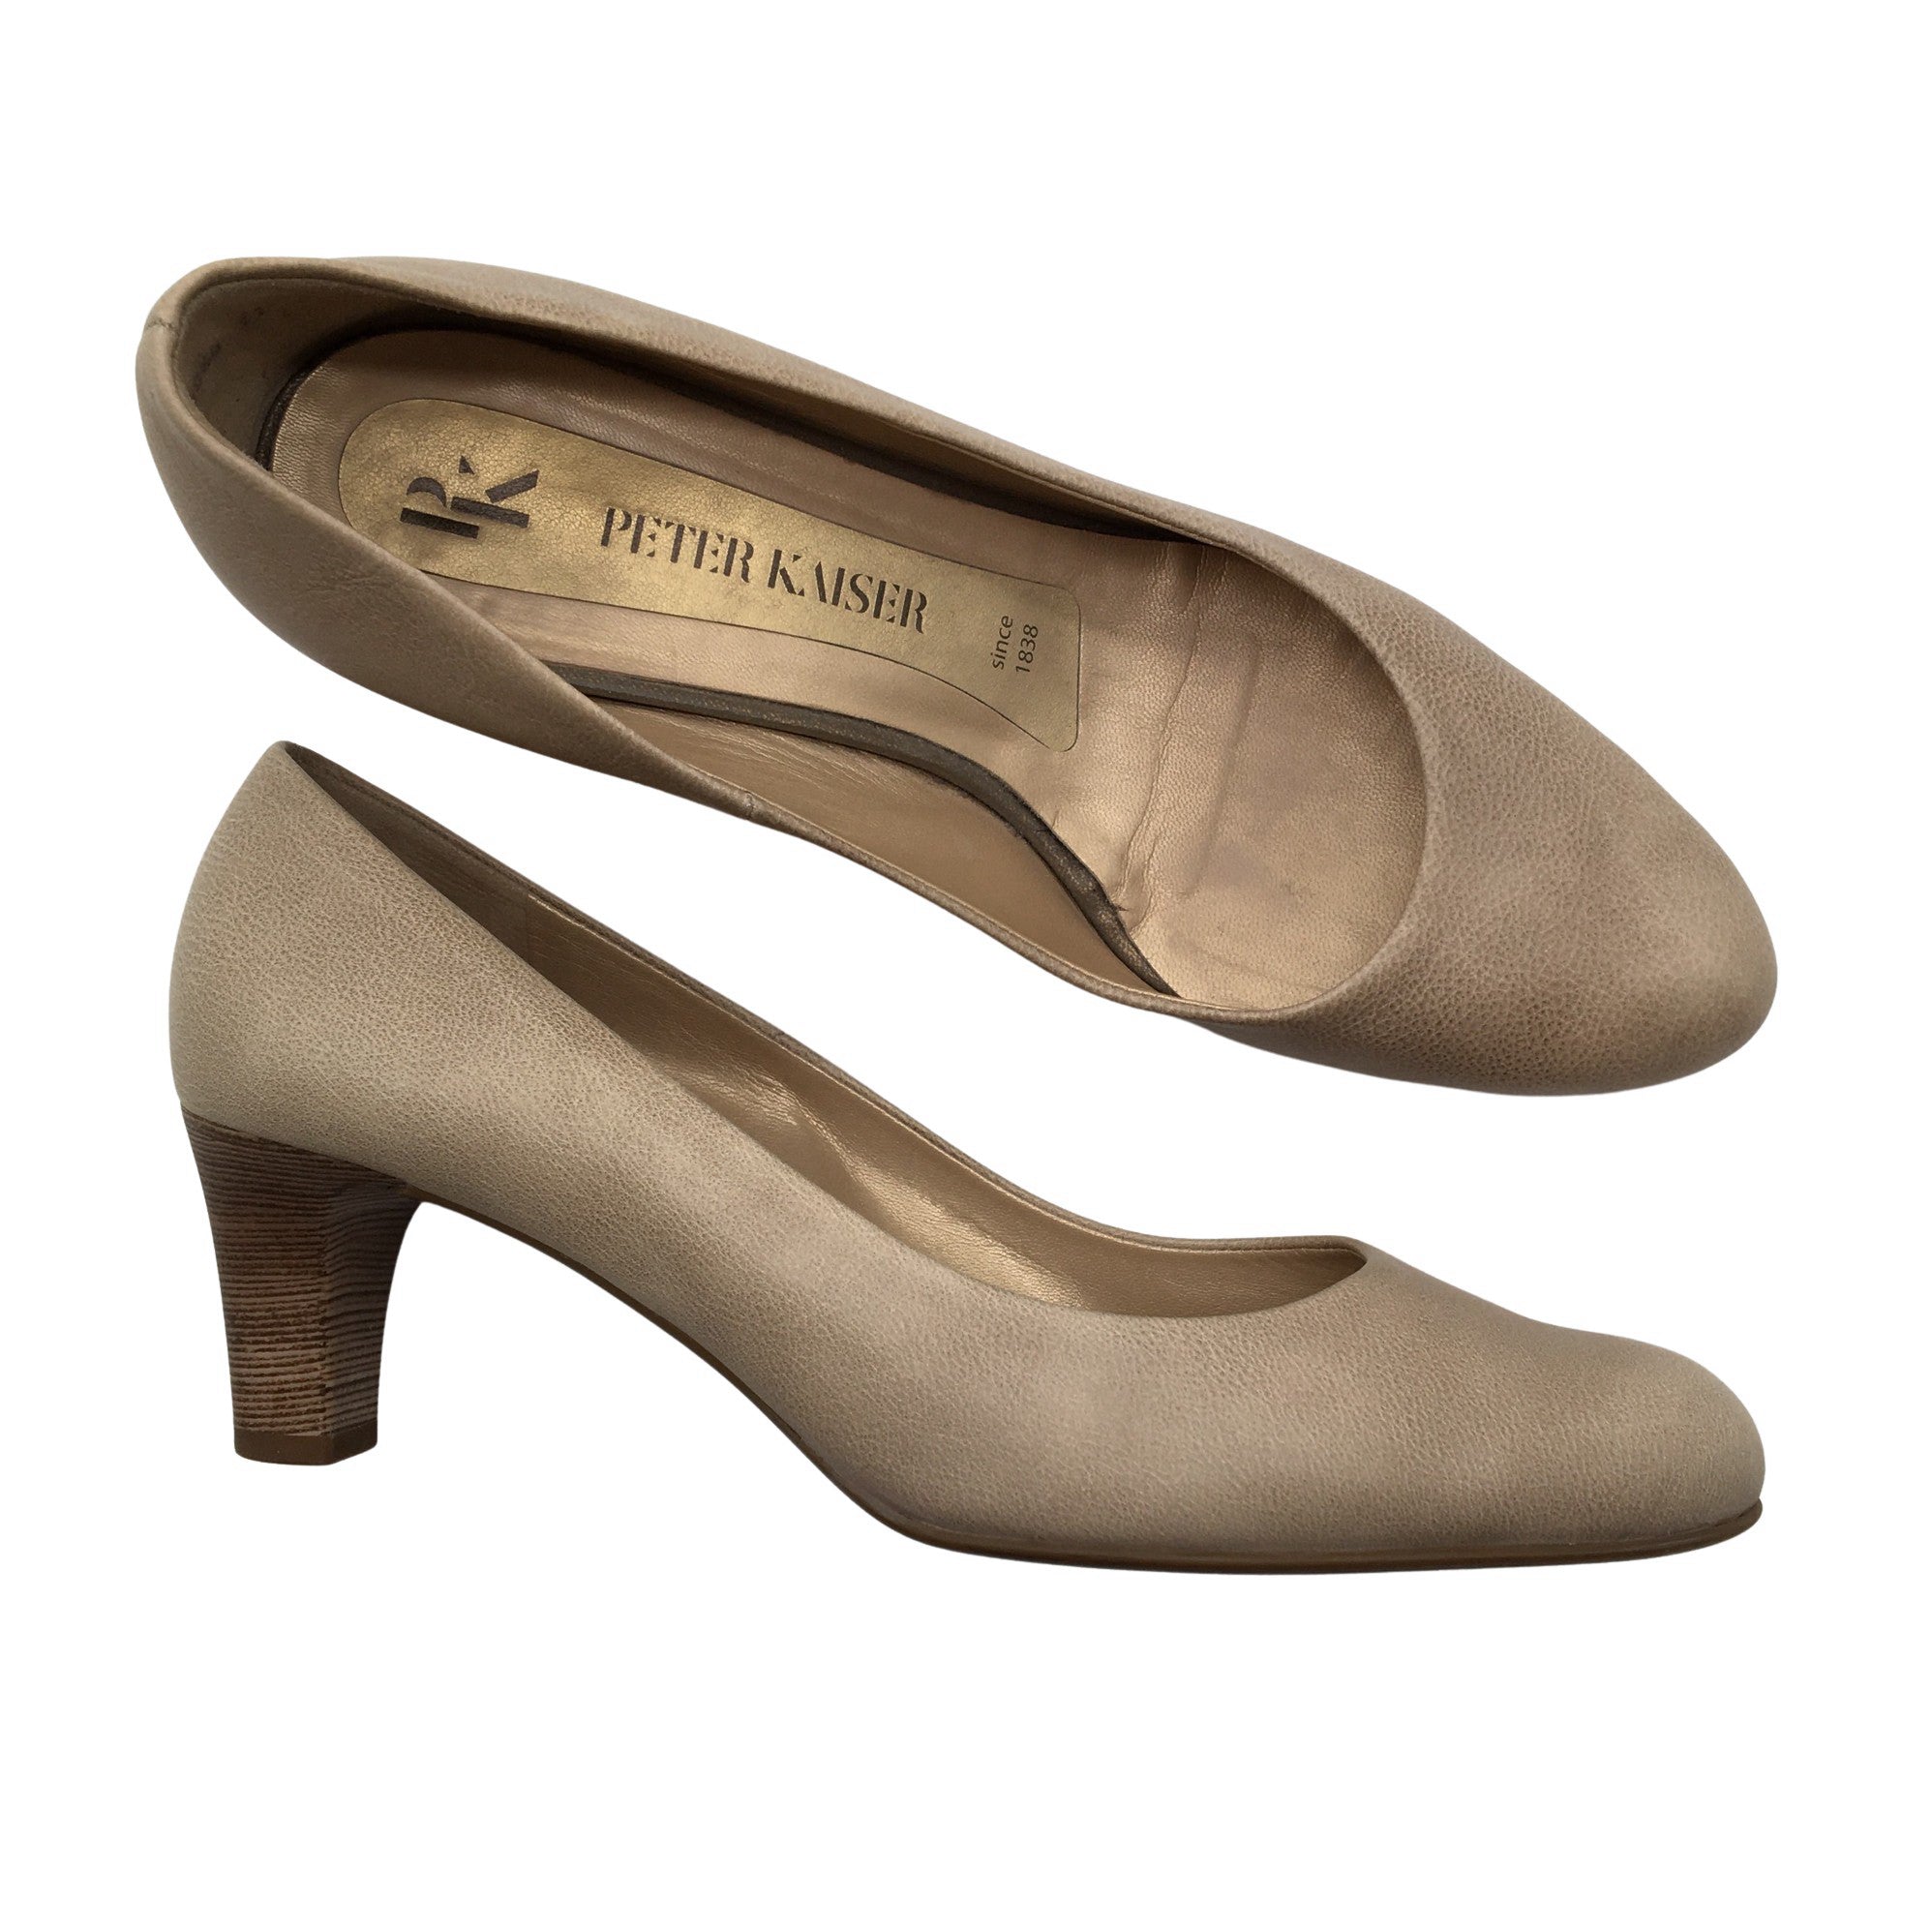 klei emotioneel drempel Women's Peter Kaiser High heels, size 37 (Beige) | Emmy